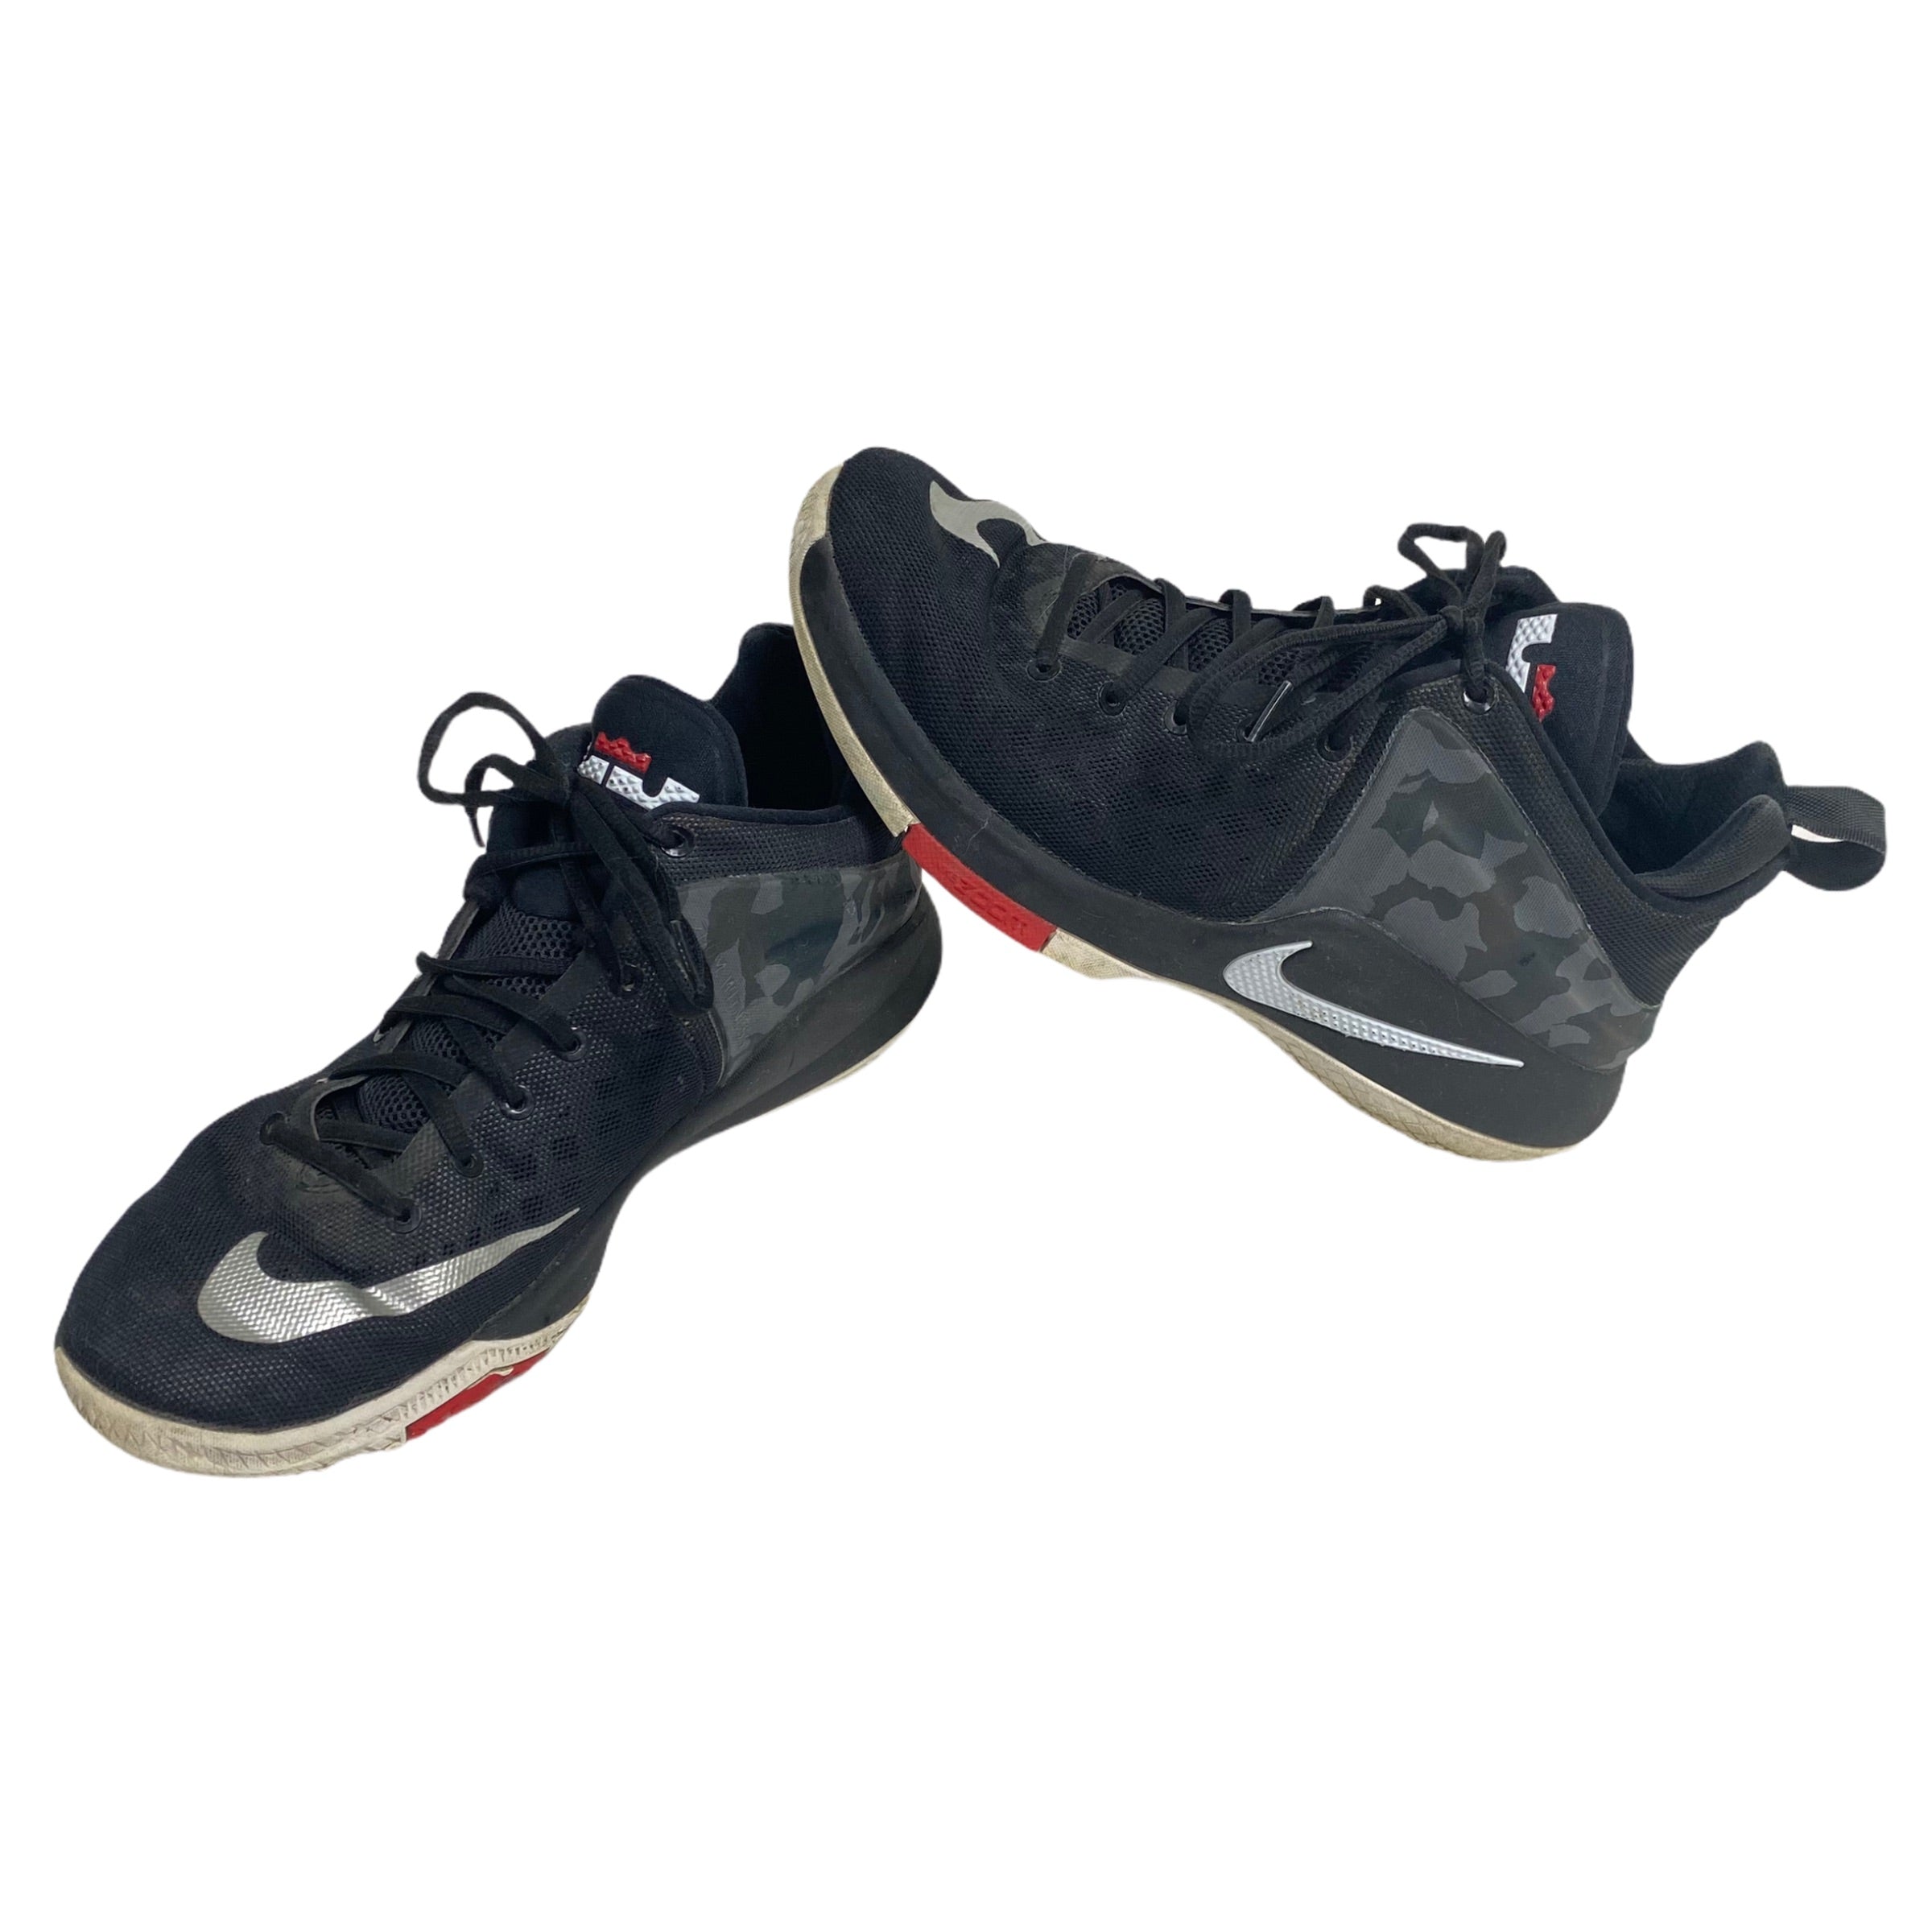 Nike Zoom Witness Lebron Black Camo Basketball Shoes | eBay